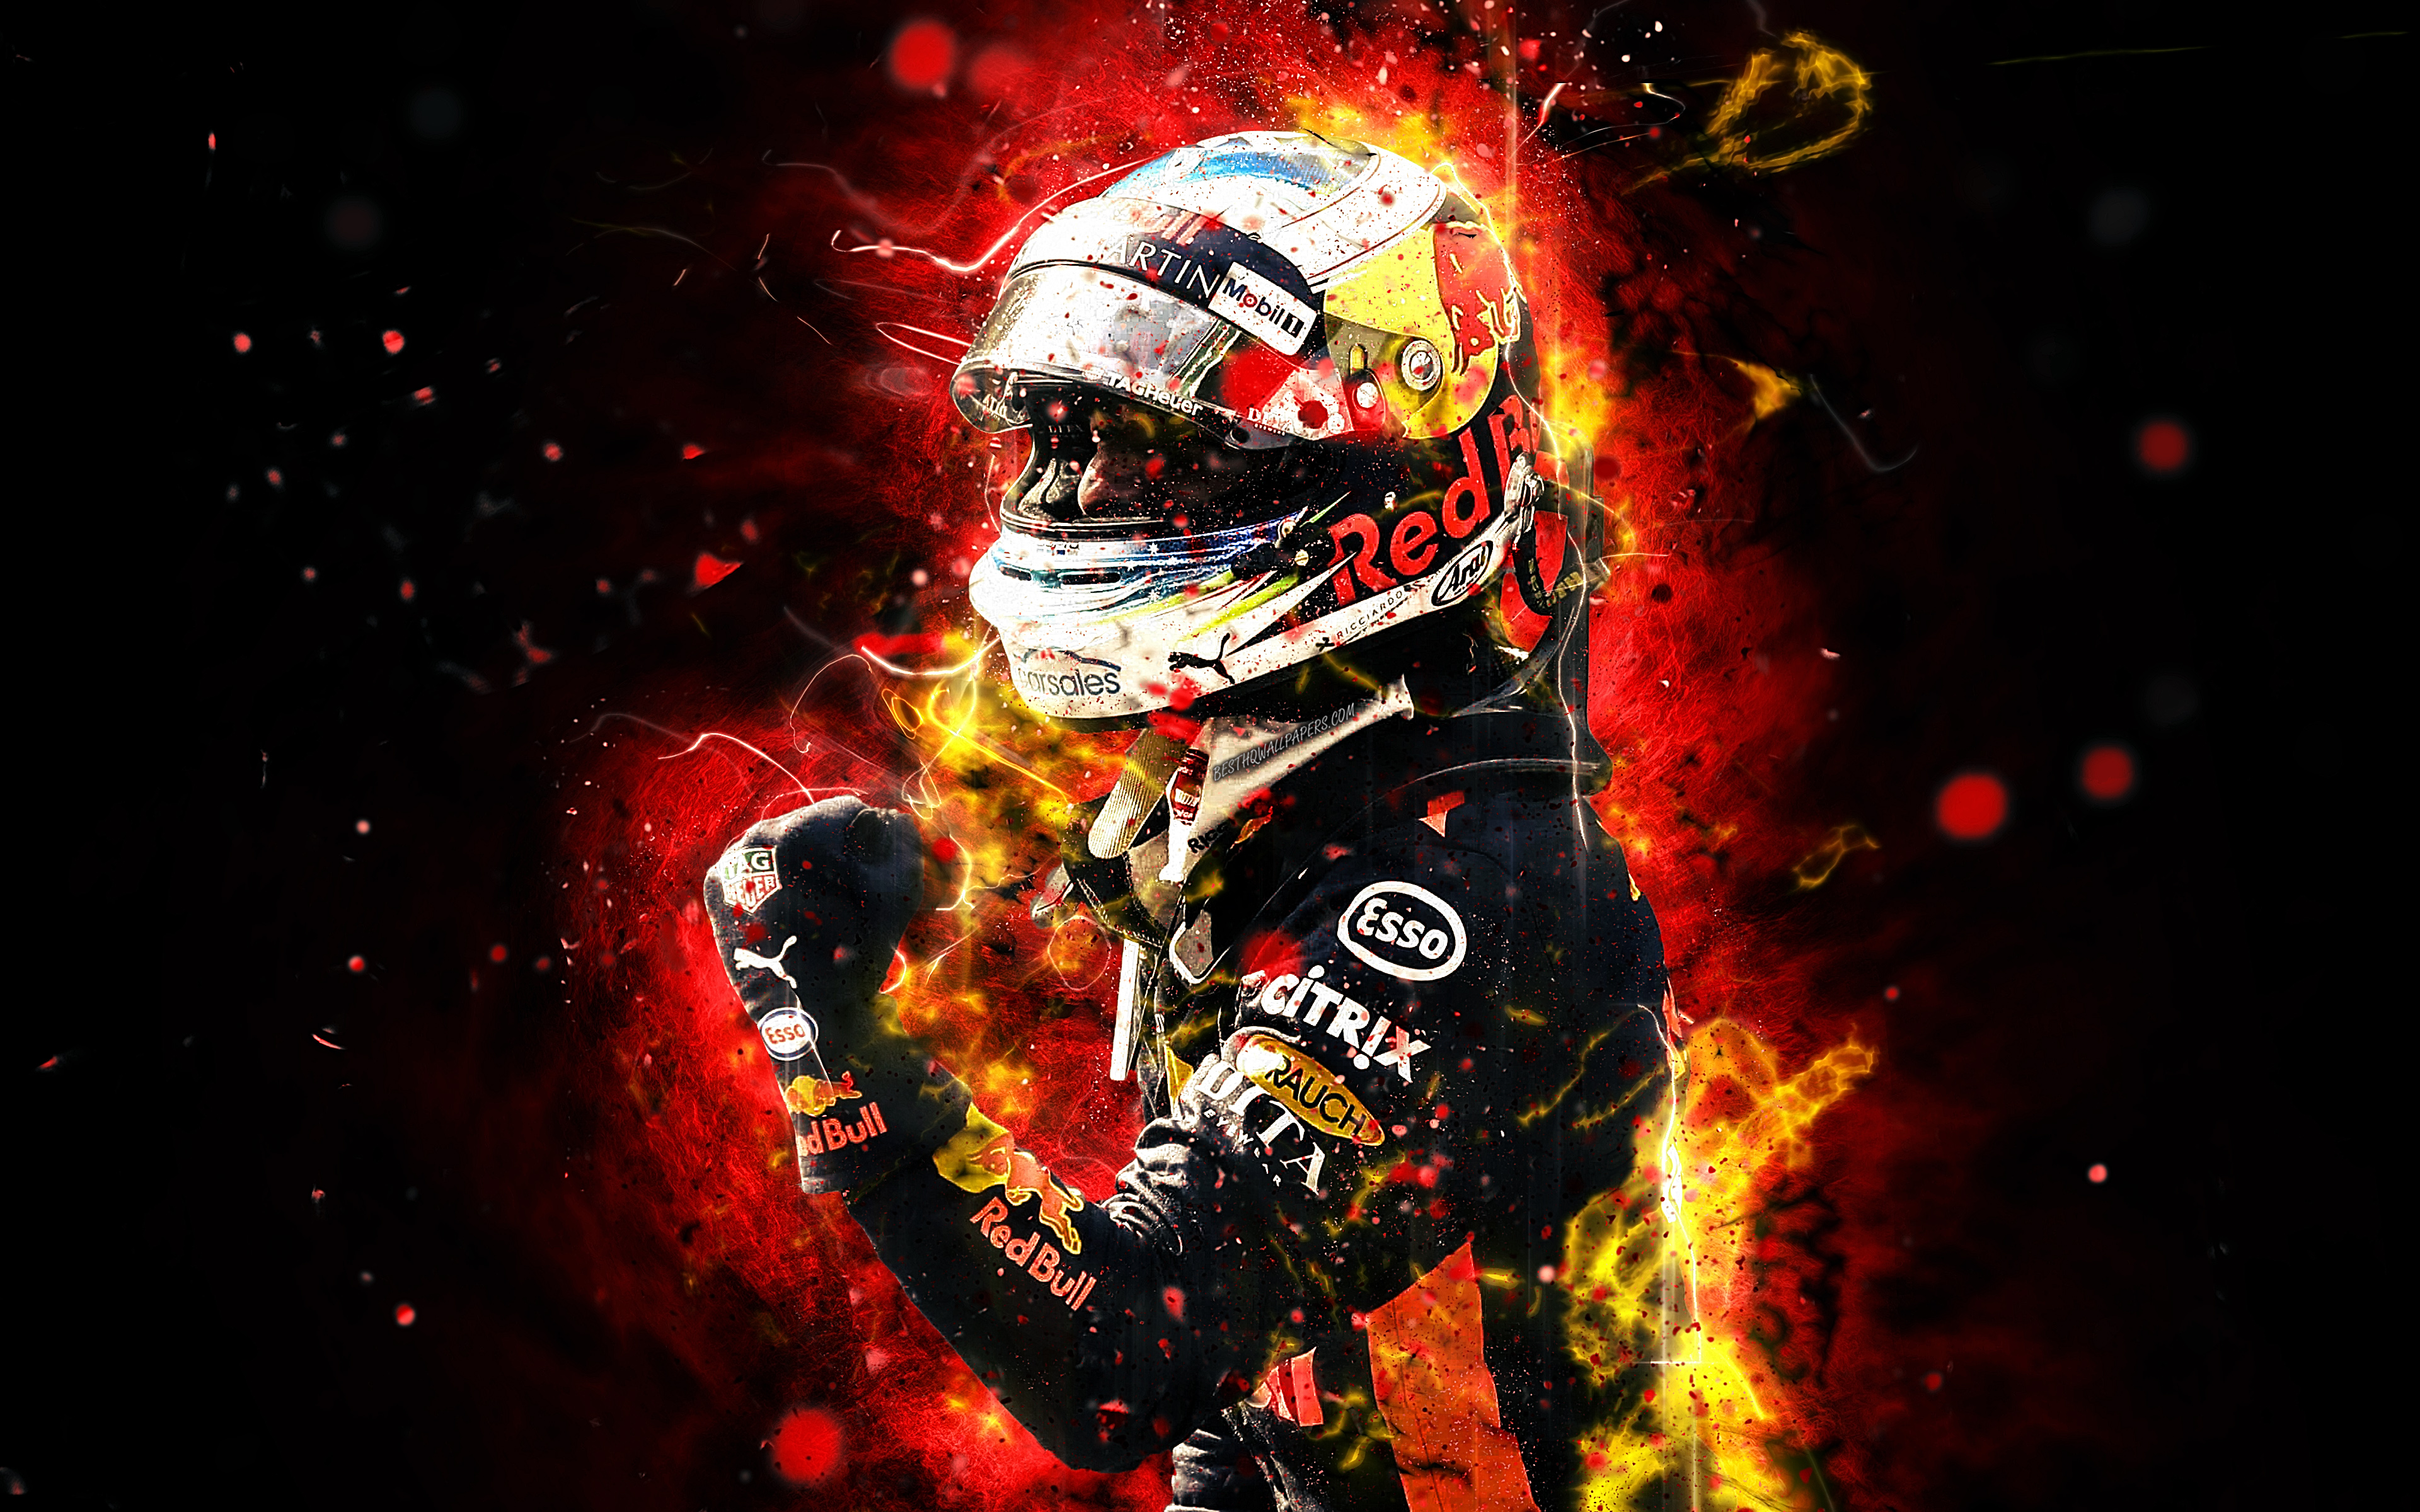 Hungarian GP  Daniel Ricciardo wallpaper in 360x640 resolution